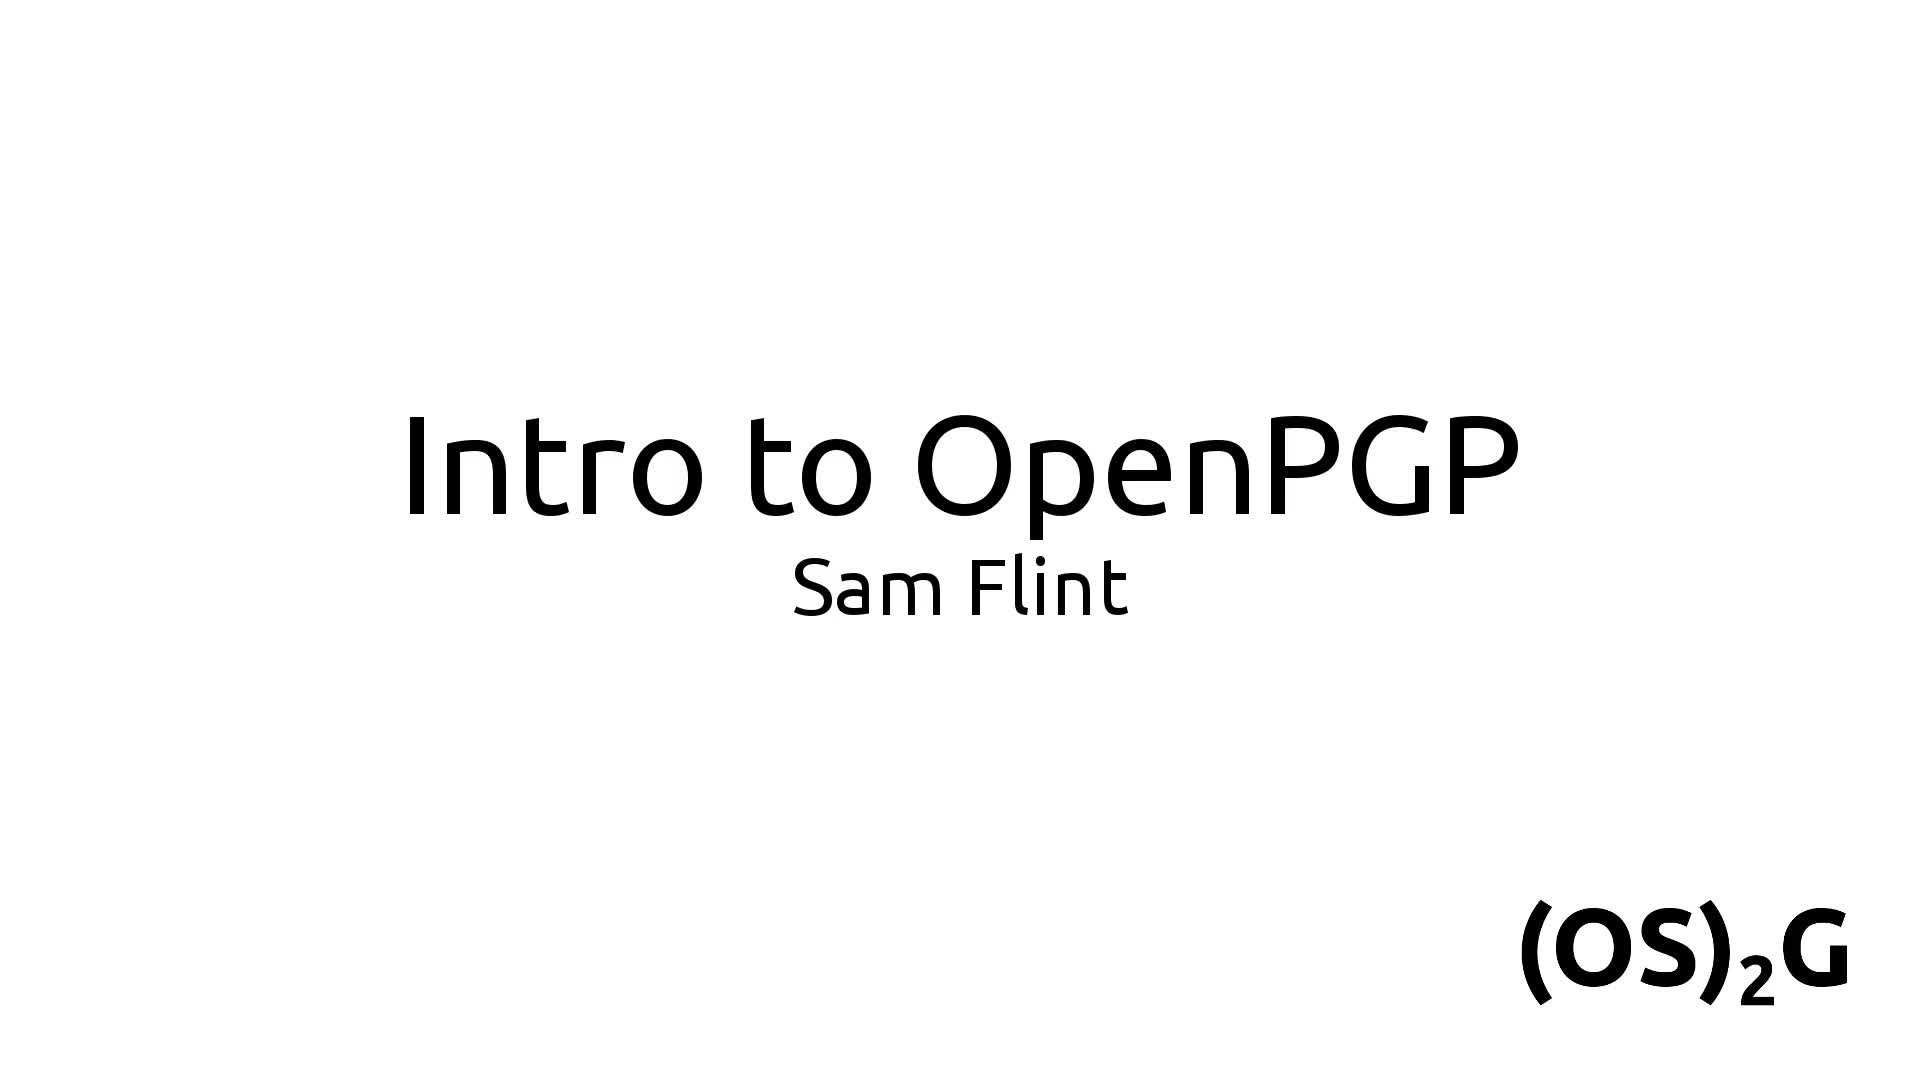 2017-02-03 Tech Talks: Intro to OpenPGP